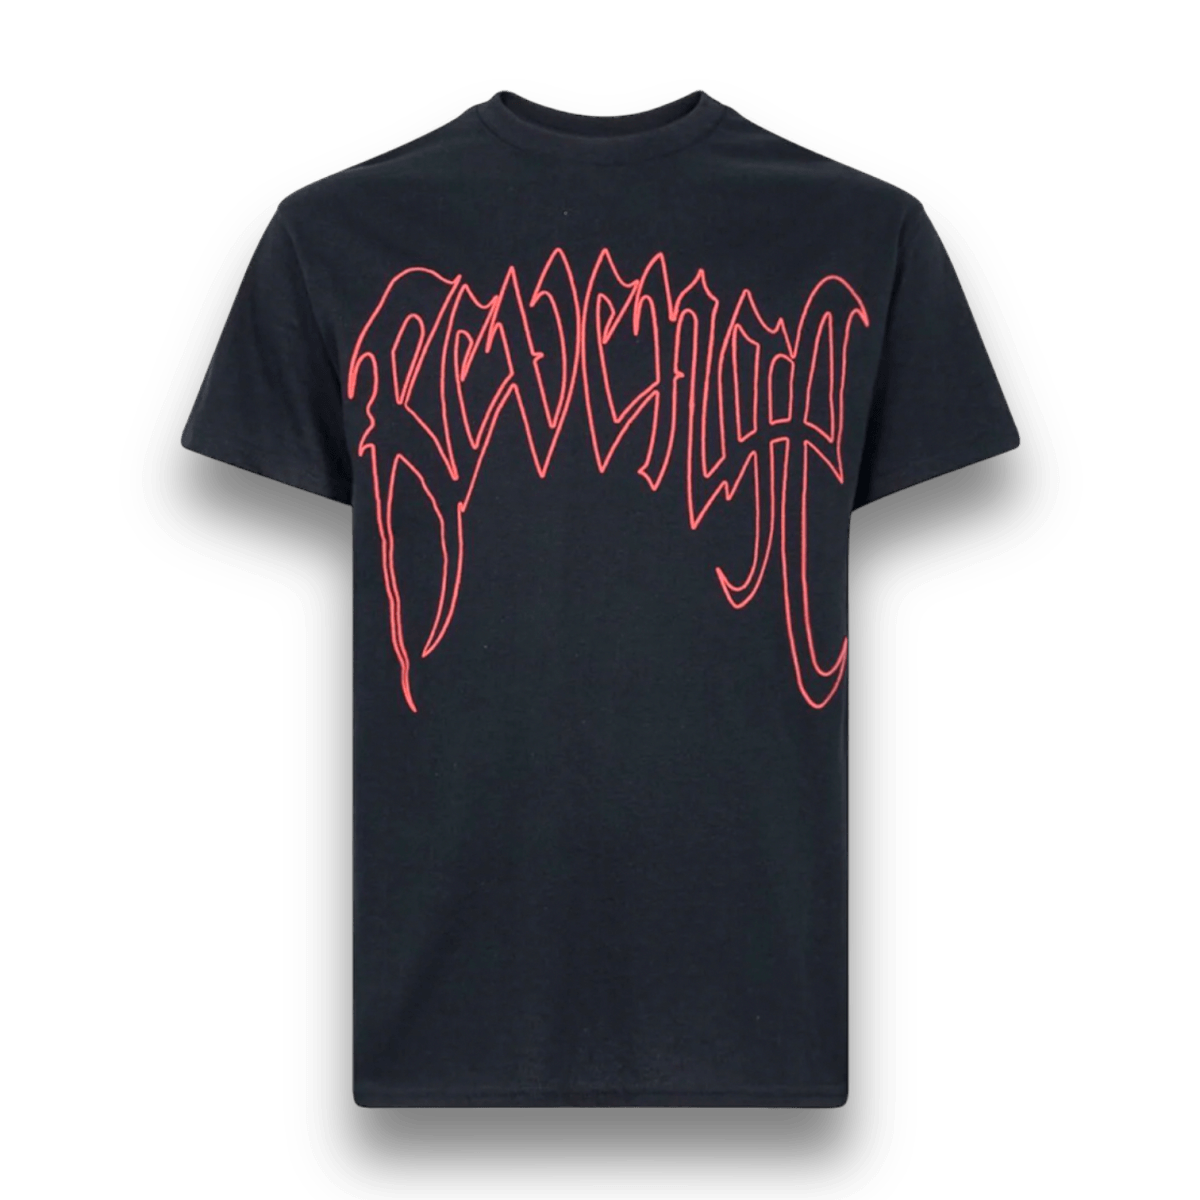 Jawns on Fire Revenge T-Shirt Revenge Tees Black with Red Letters